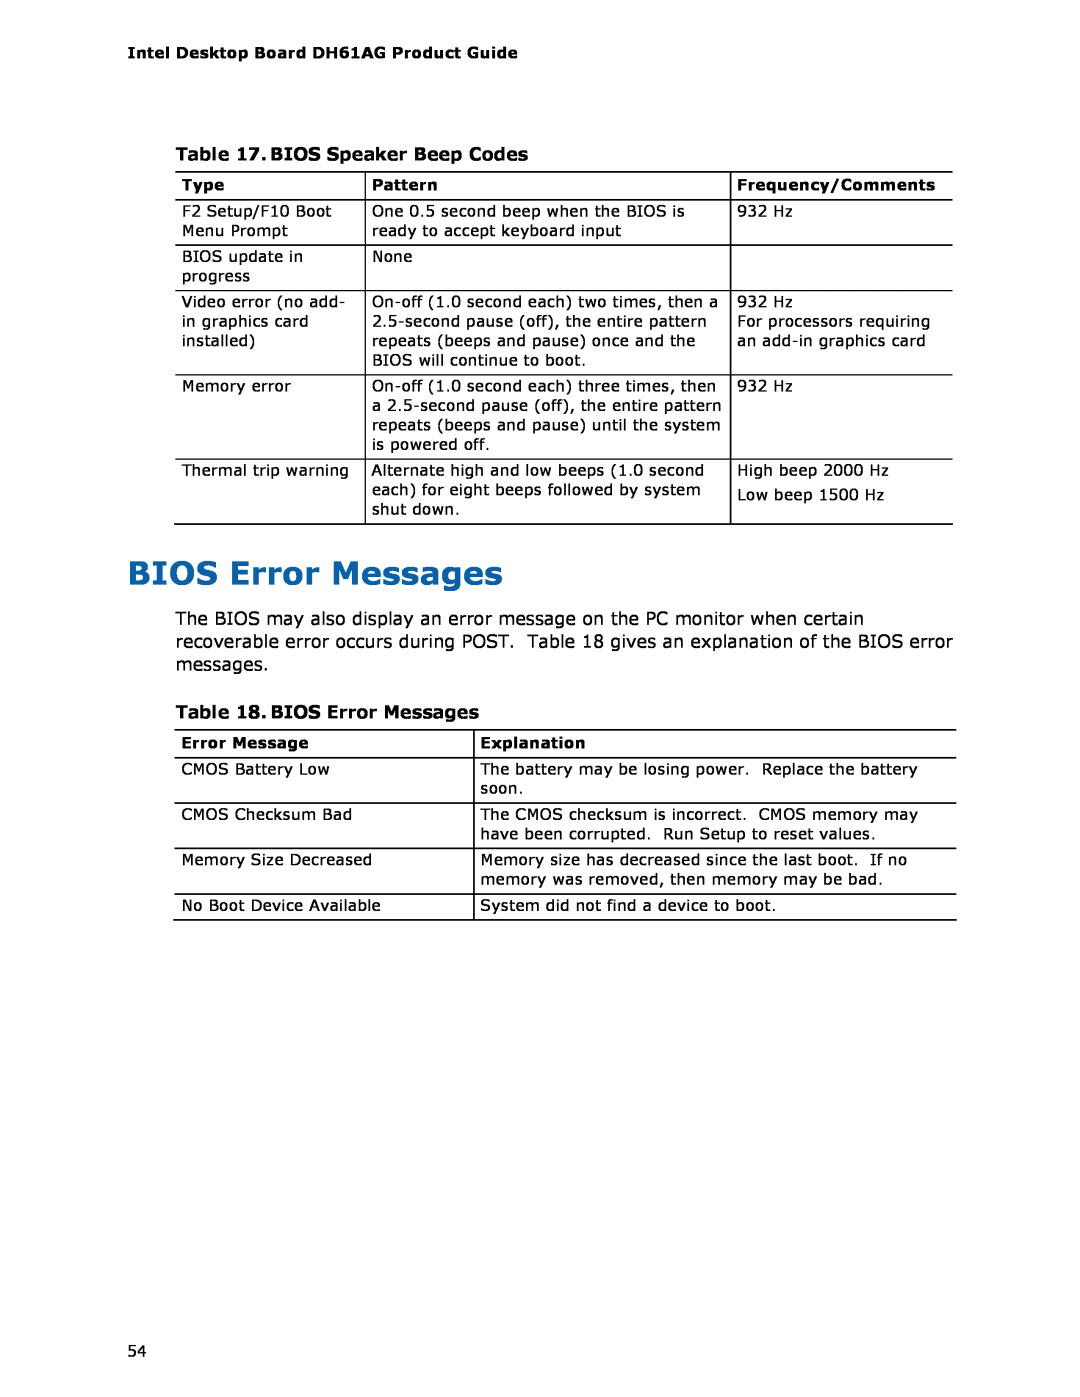 Intel BOXDH61AG manual BIOS Error Messages, BIOS Speaker Beep Codes 